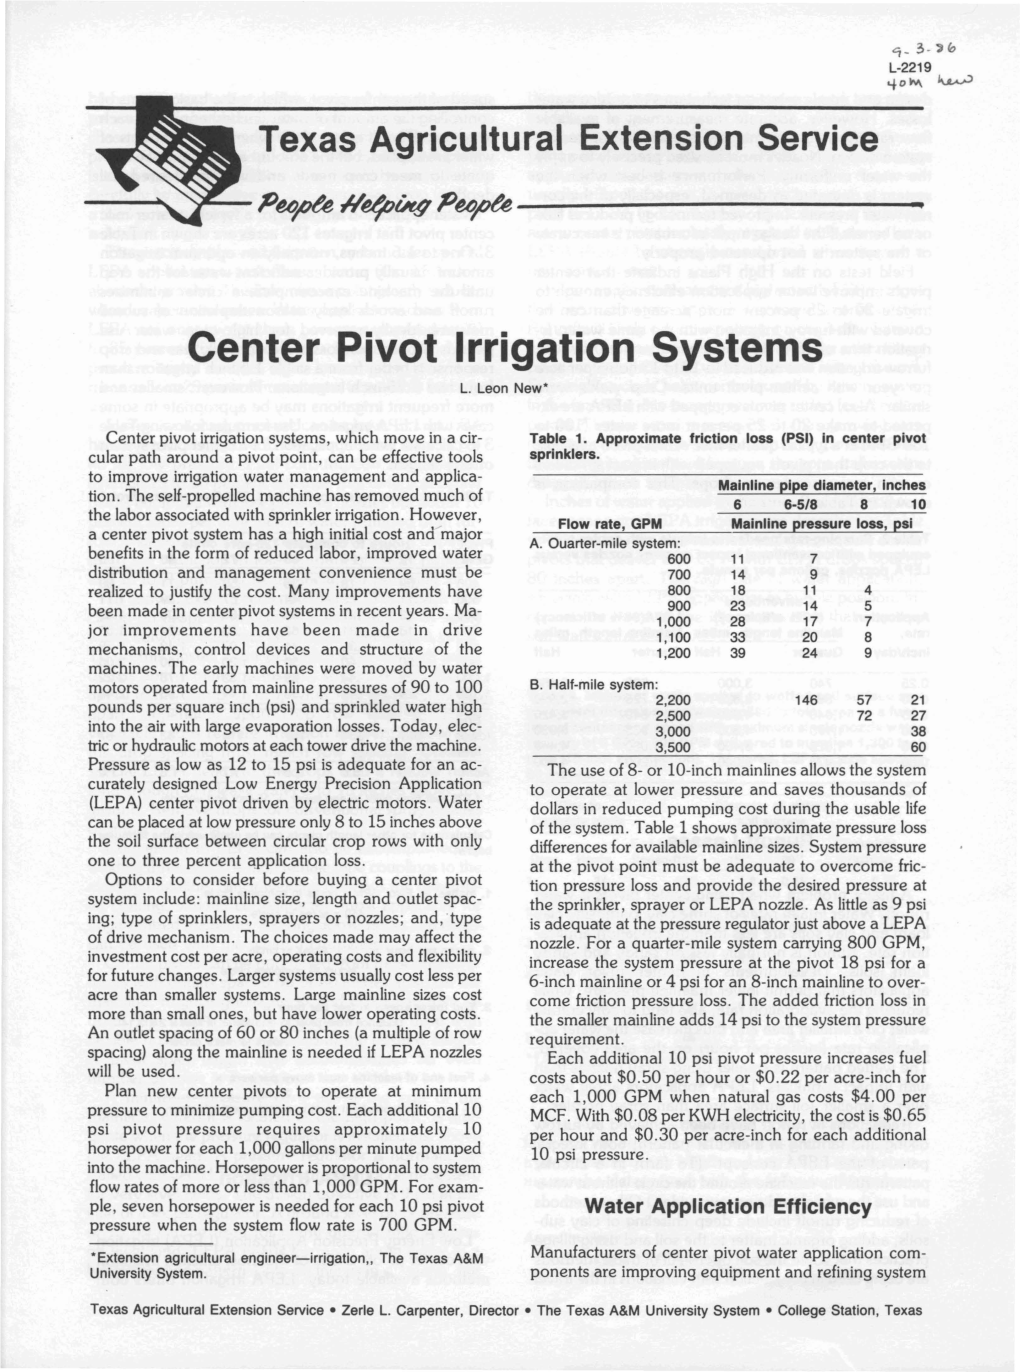 Center Pivot Irrigation Systems L